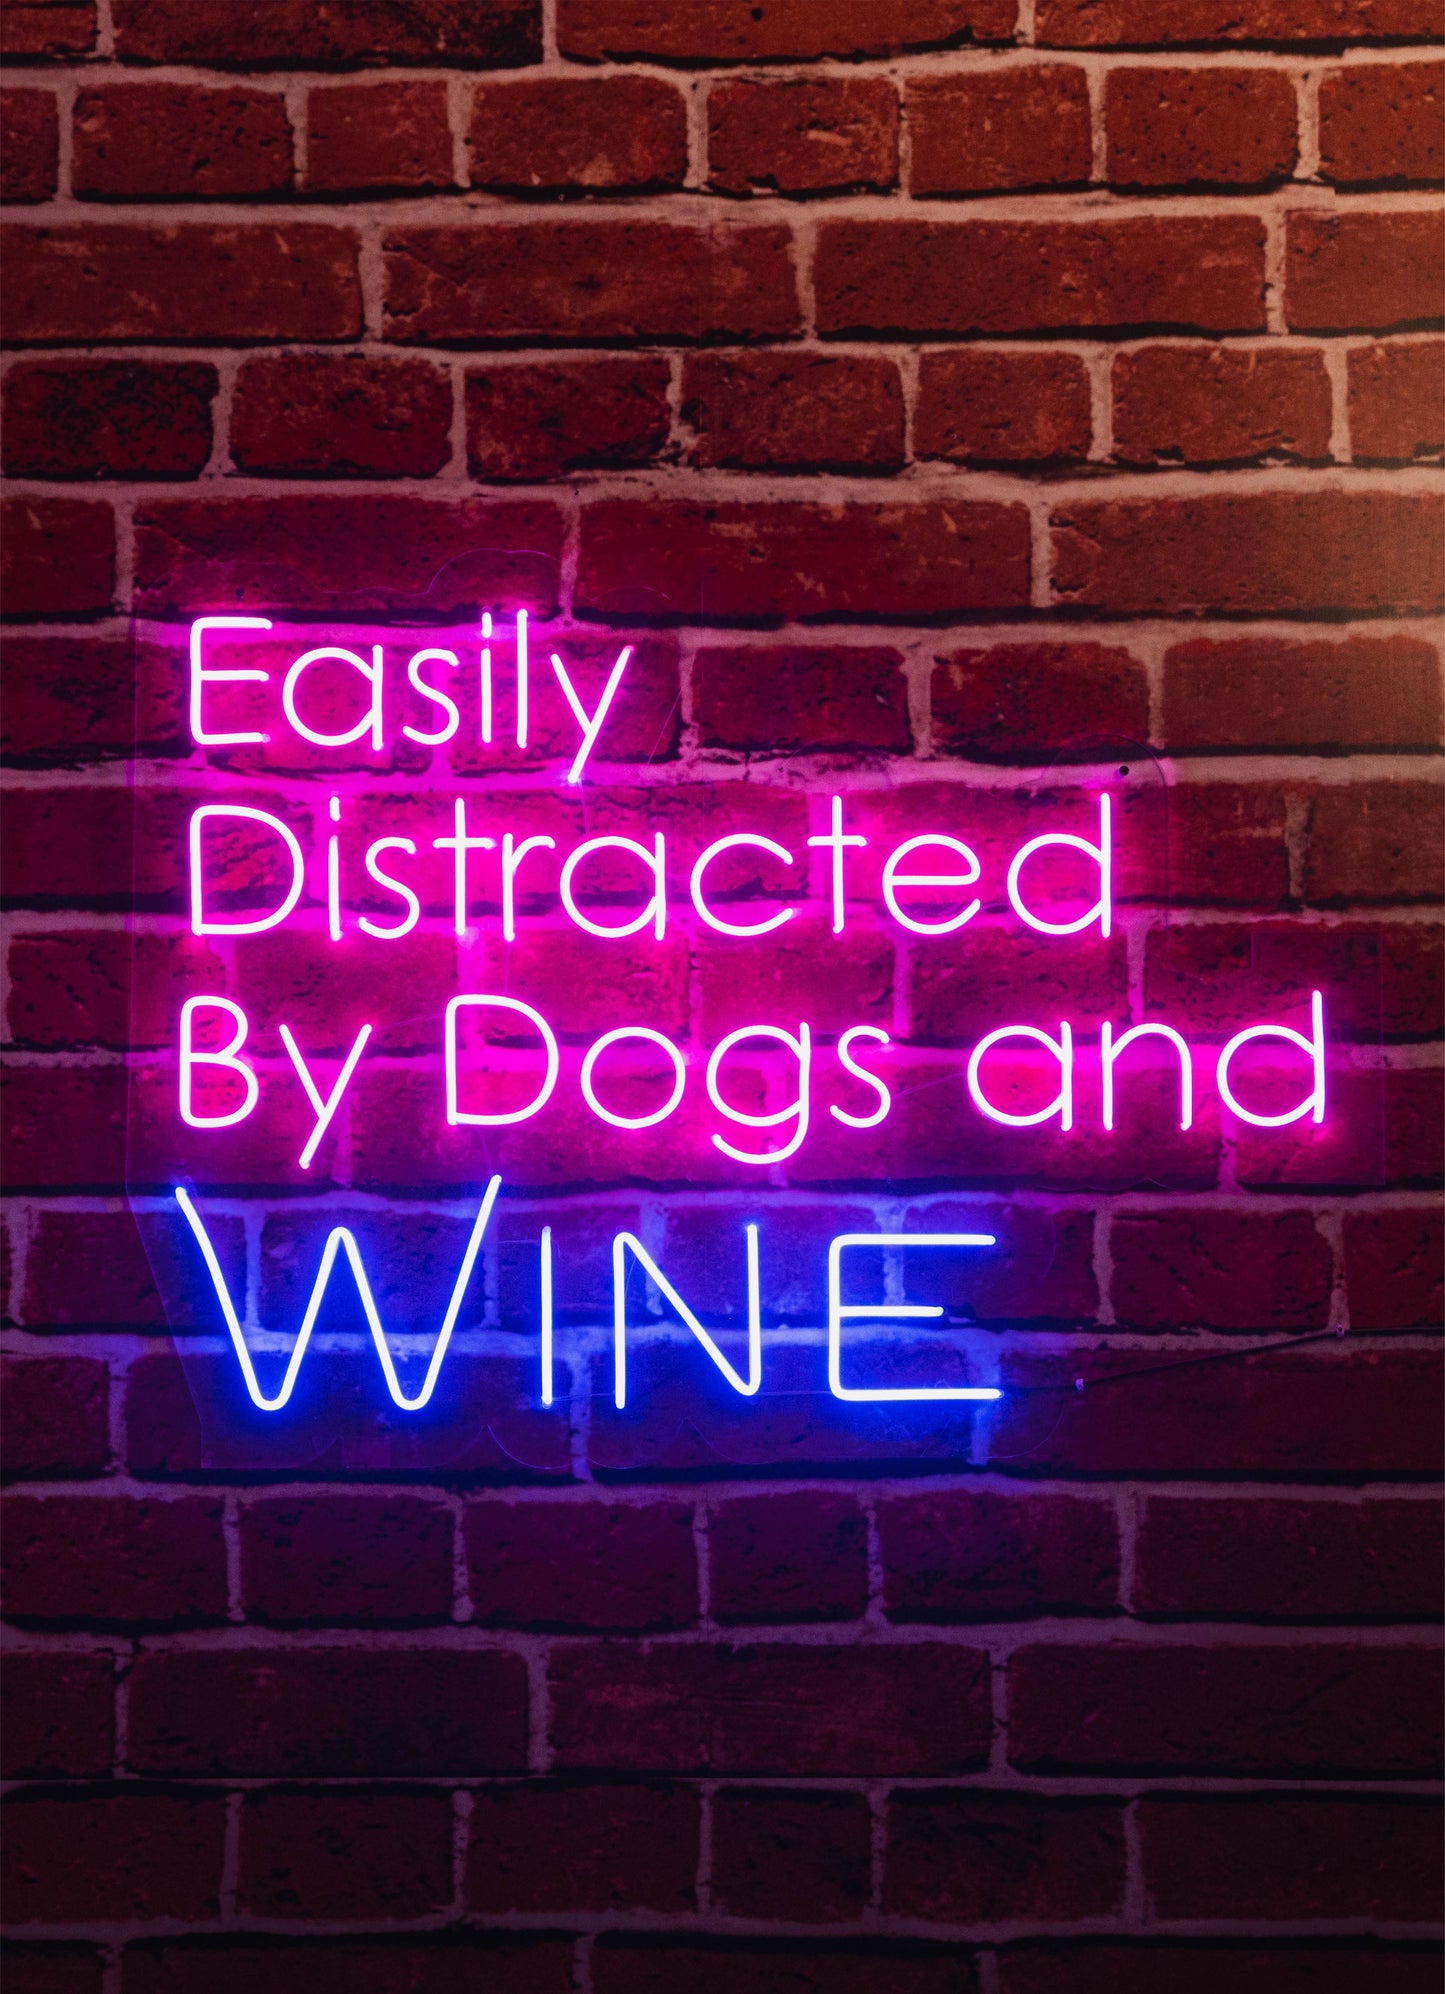 Dogs & Wine